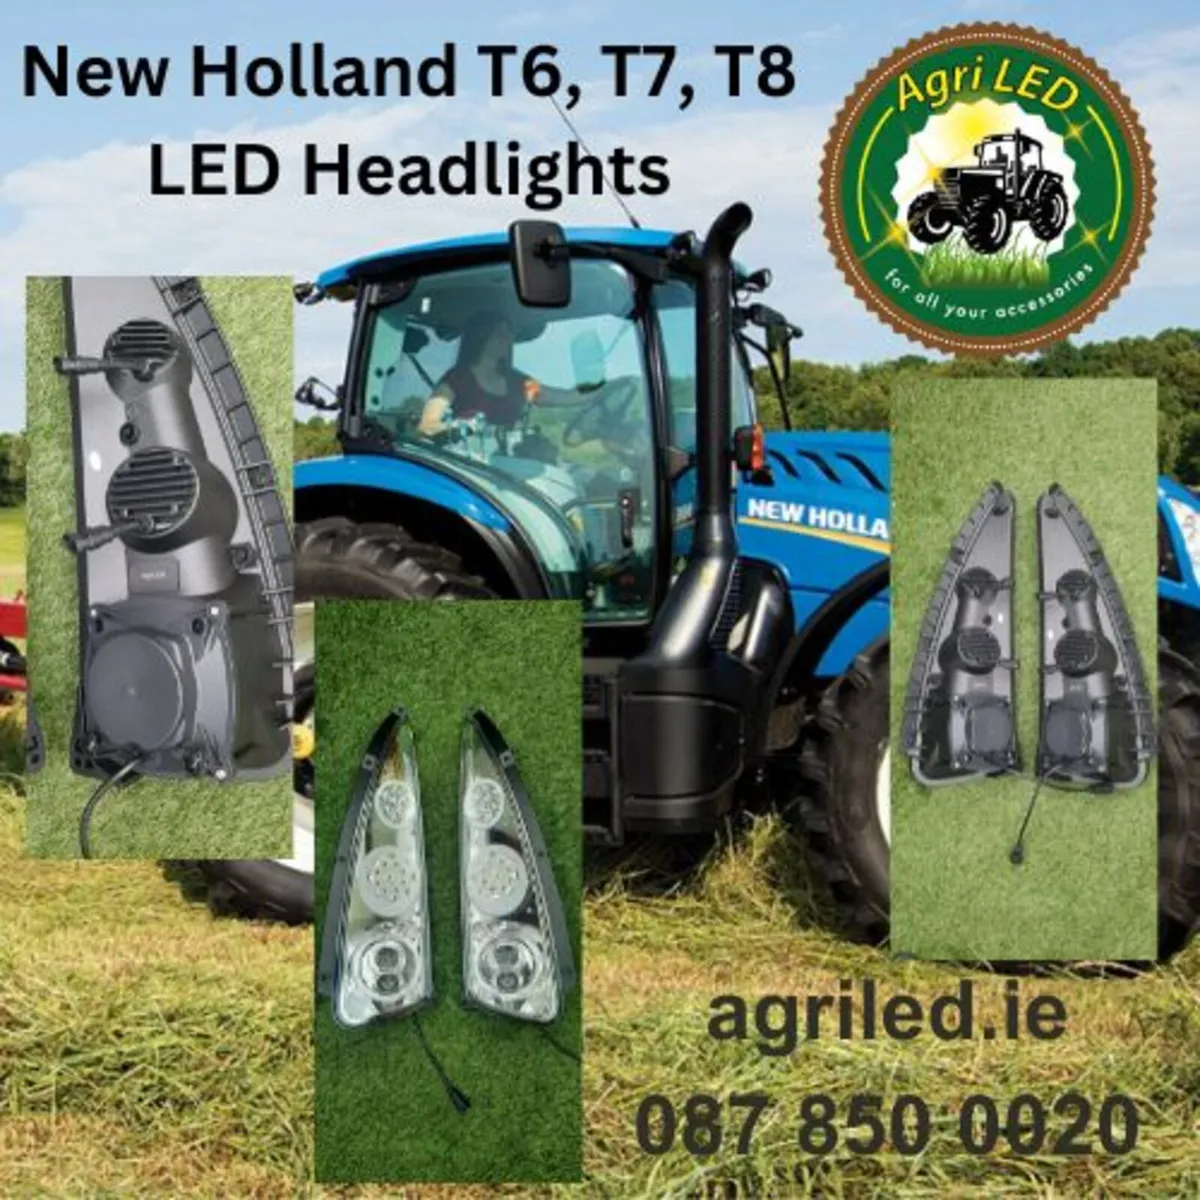 New Holland T6, T7, T8 LED Headlights - Image 1